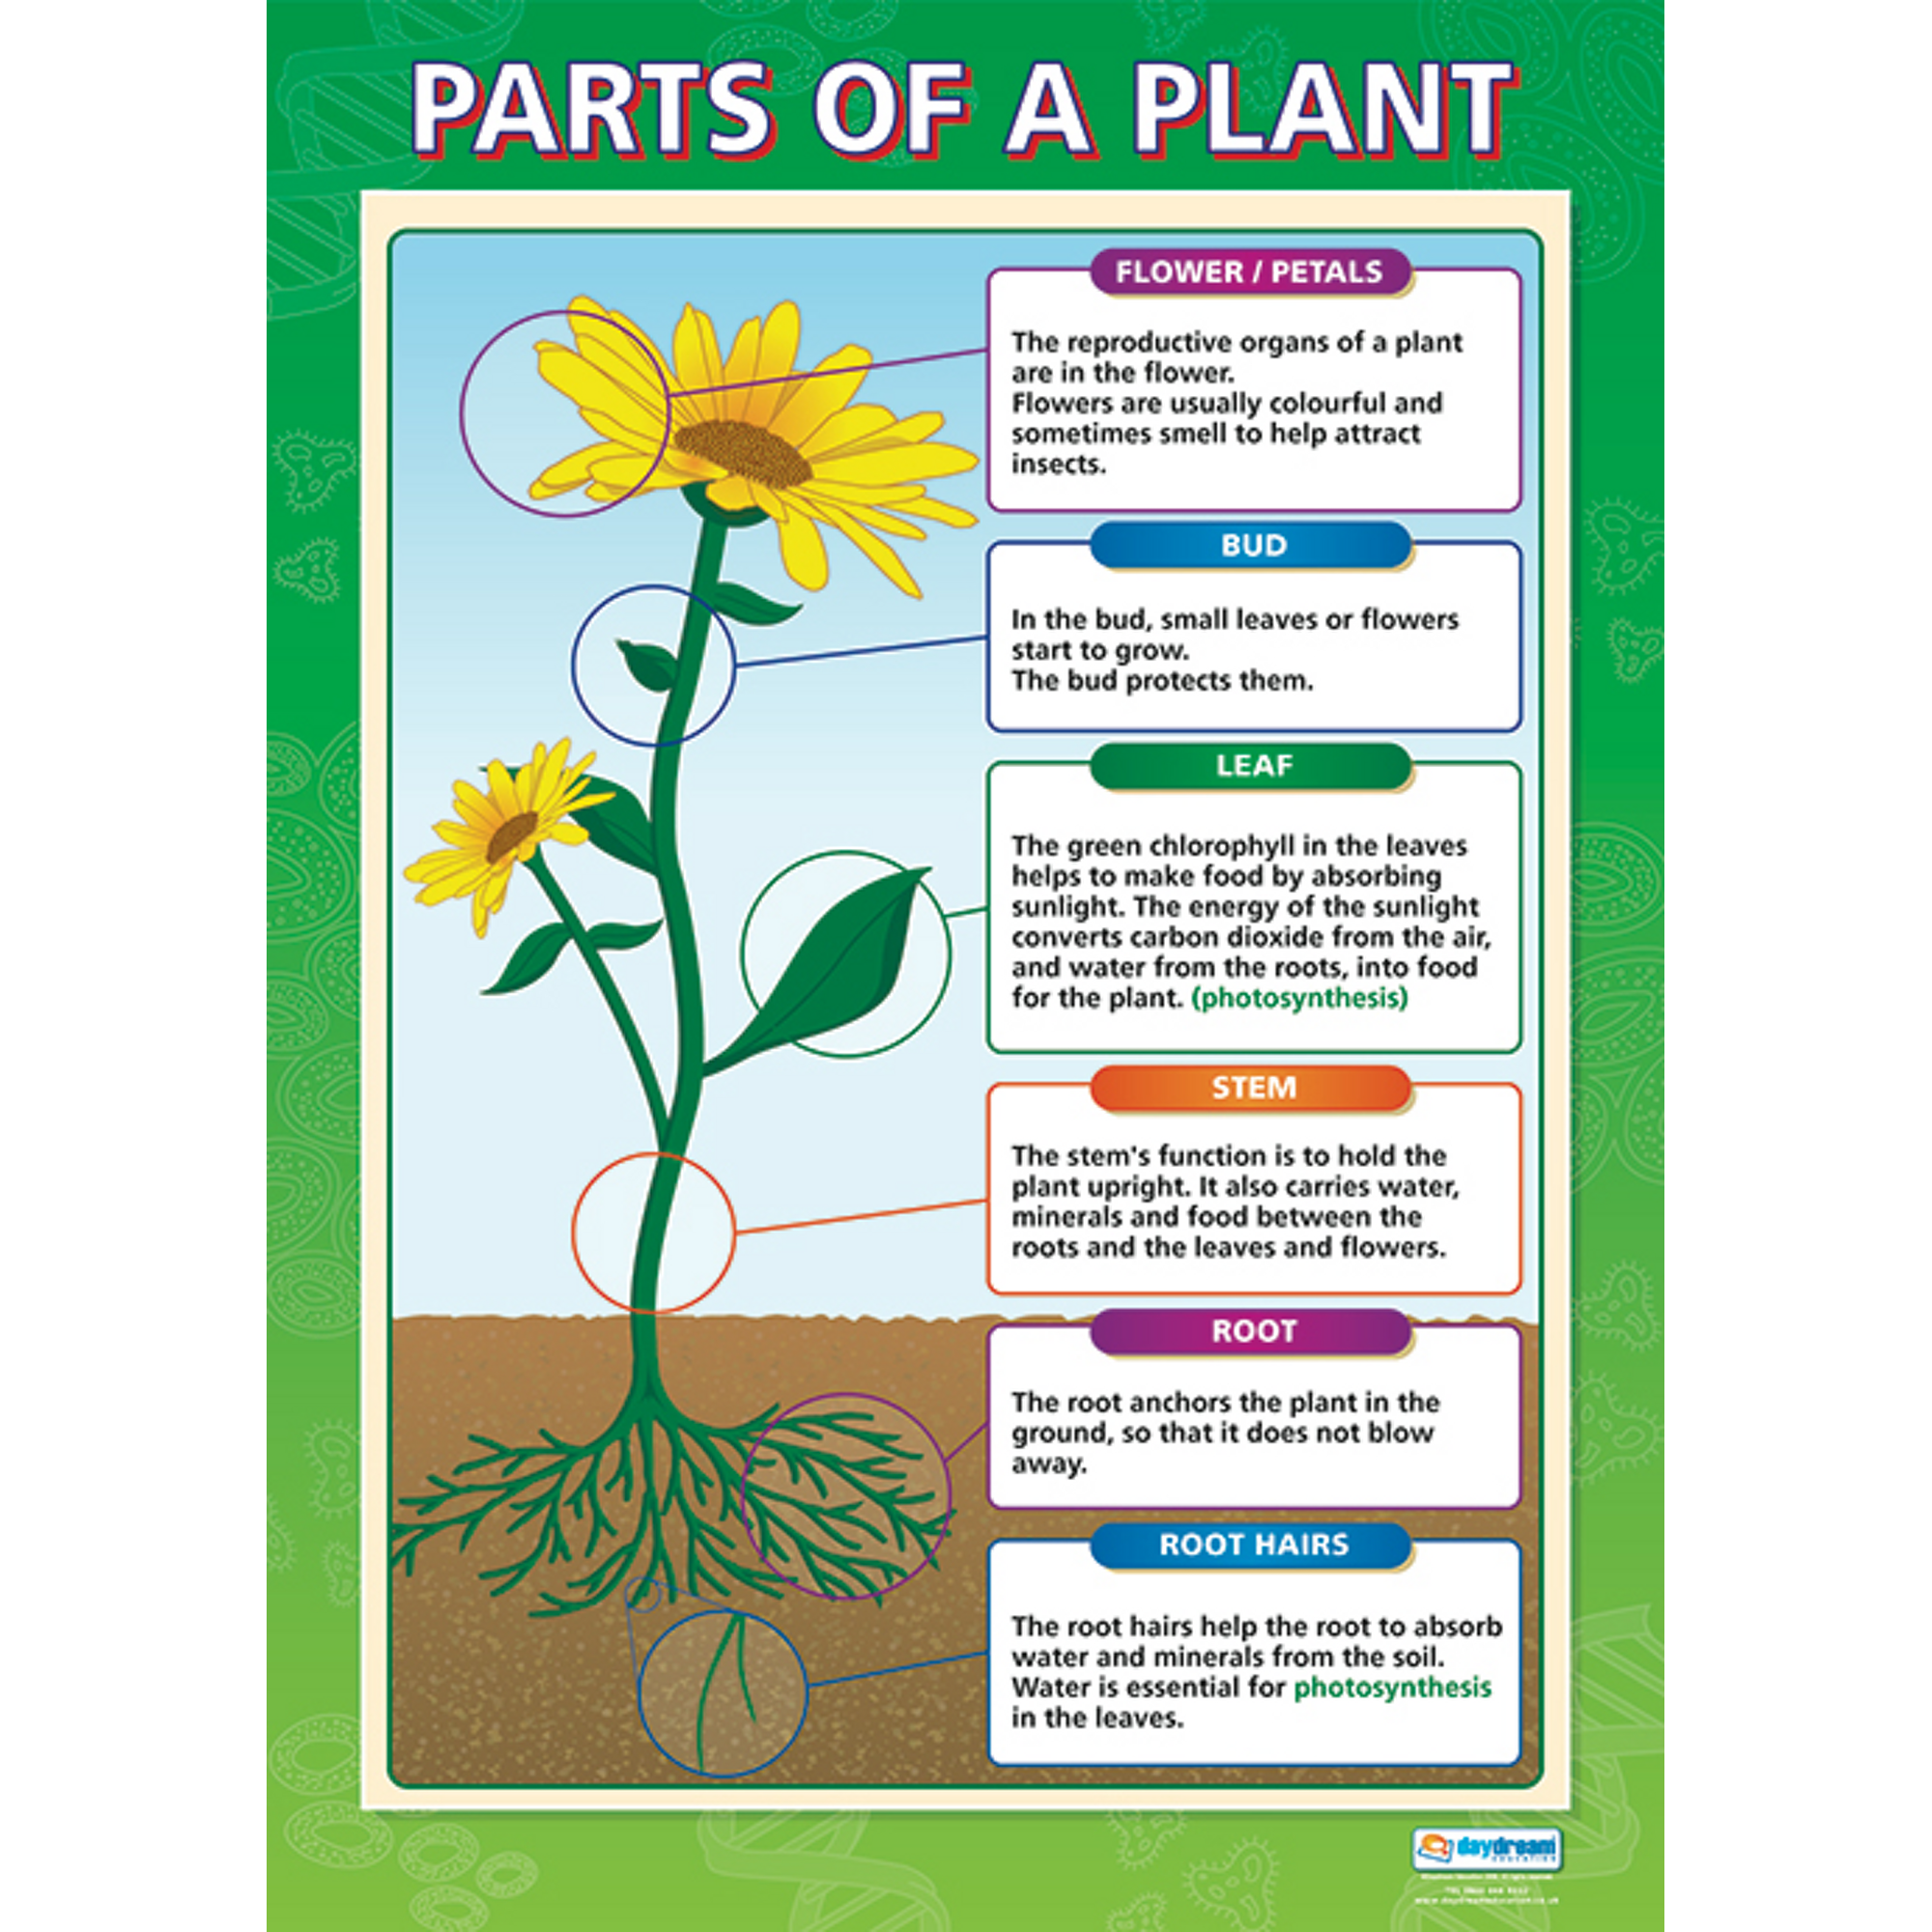 Plants kinds. Растения. Плакат. Parts of a Plant. Parts of Plants for Kids. Parts of a Flower for Kids.